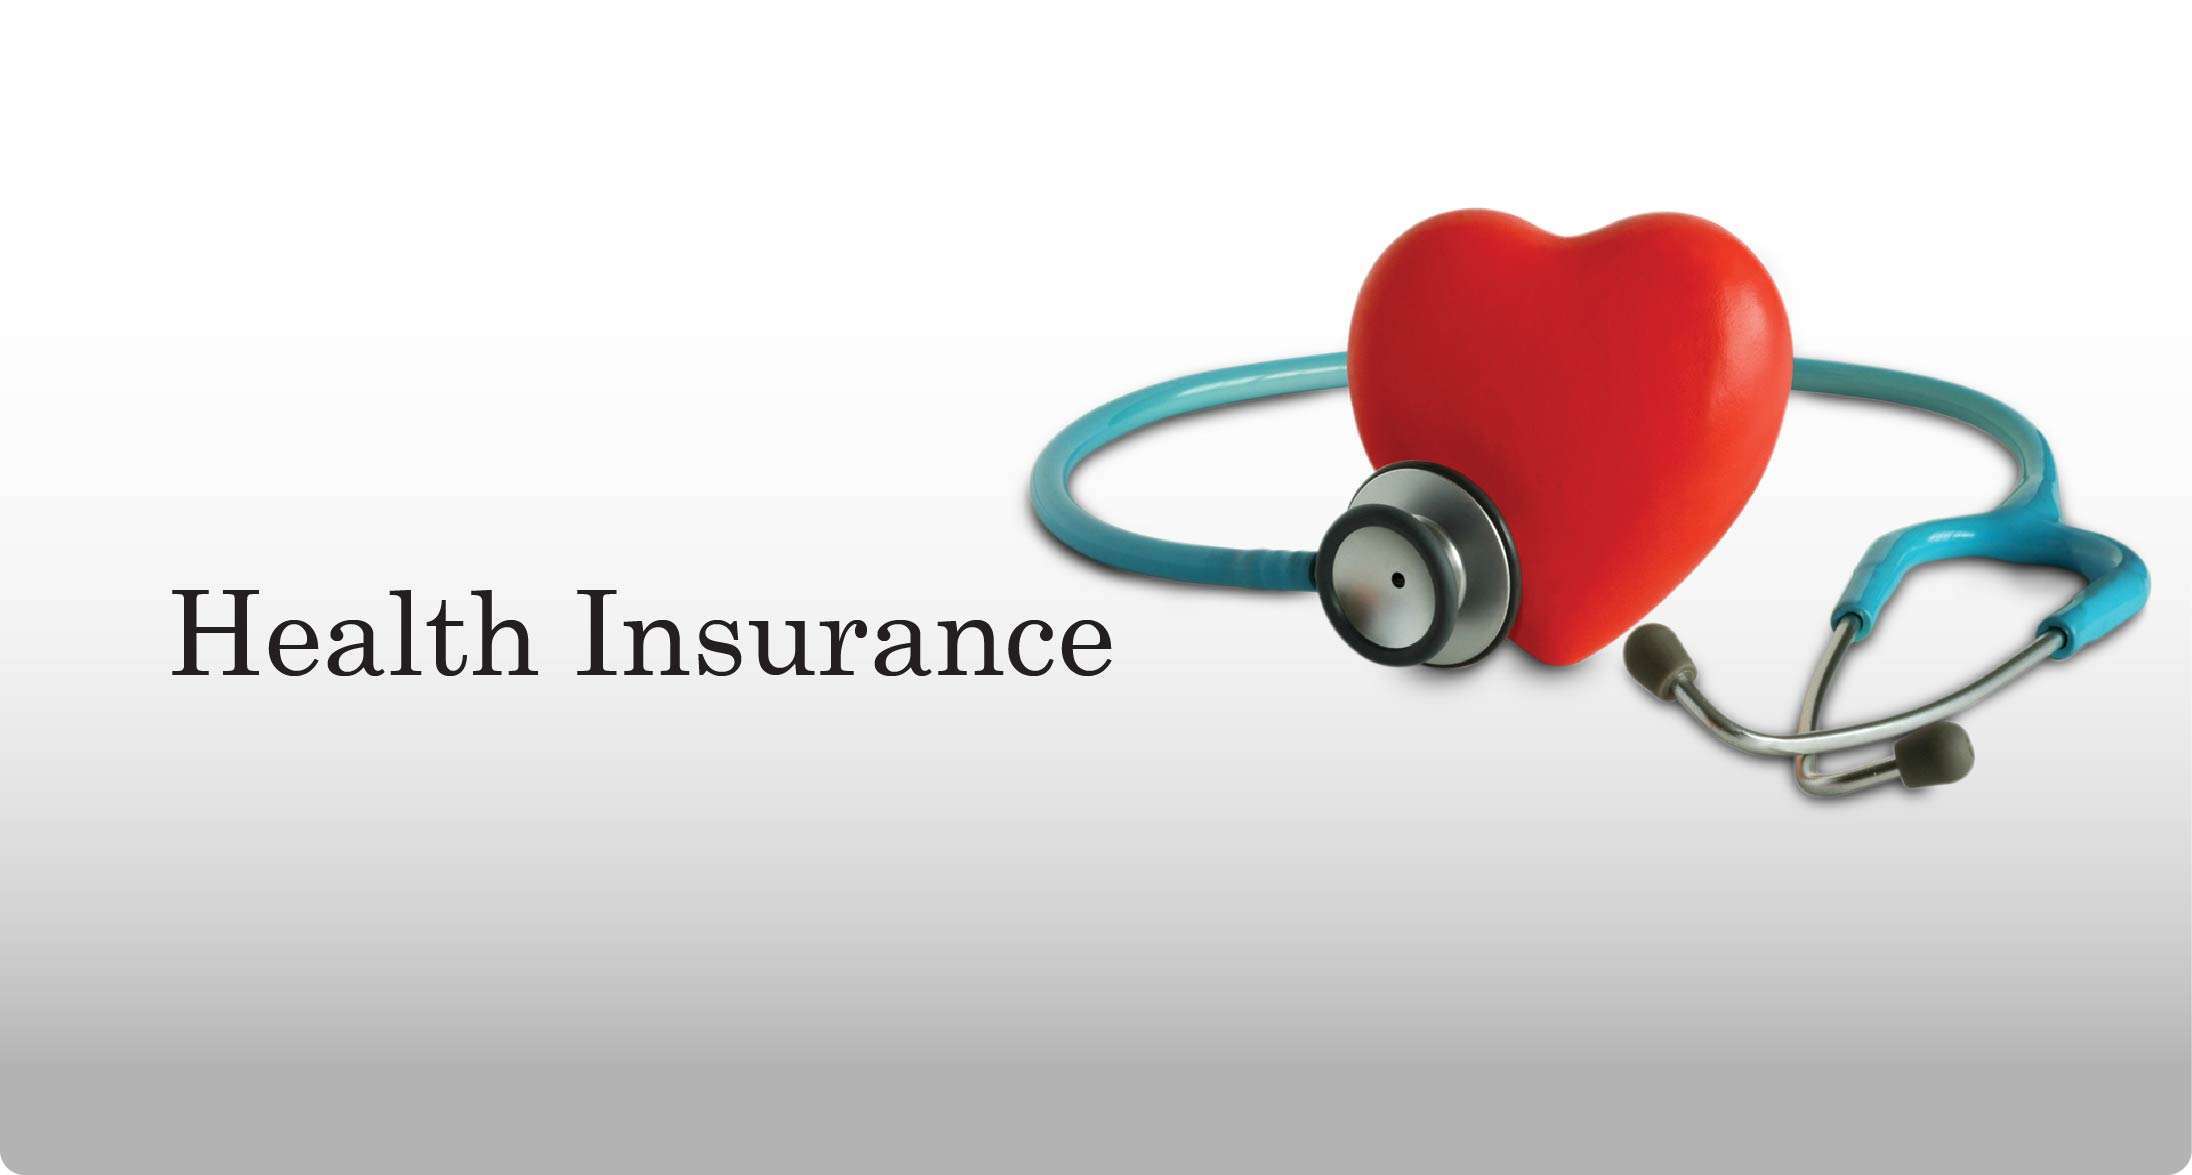 Health Insurance Wallpaper Free Health Insurance Background